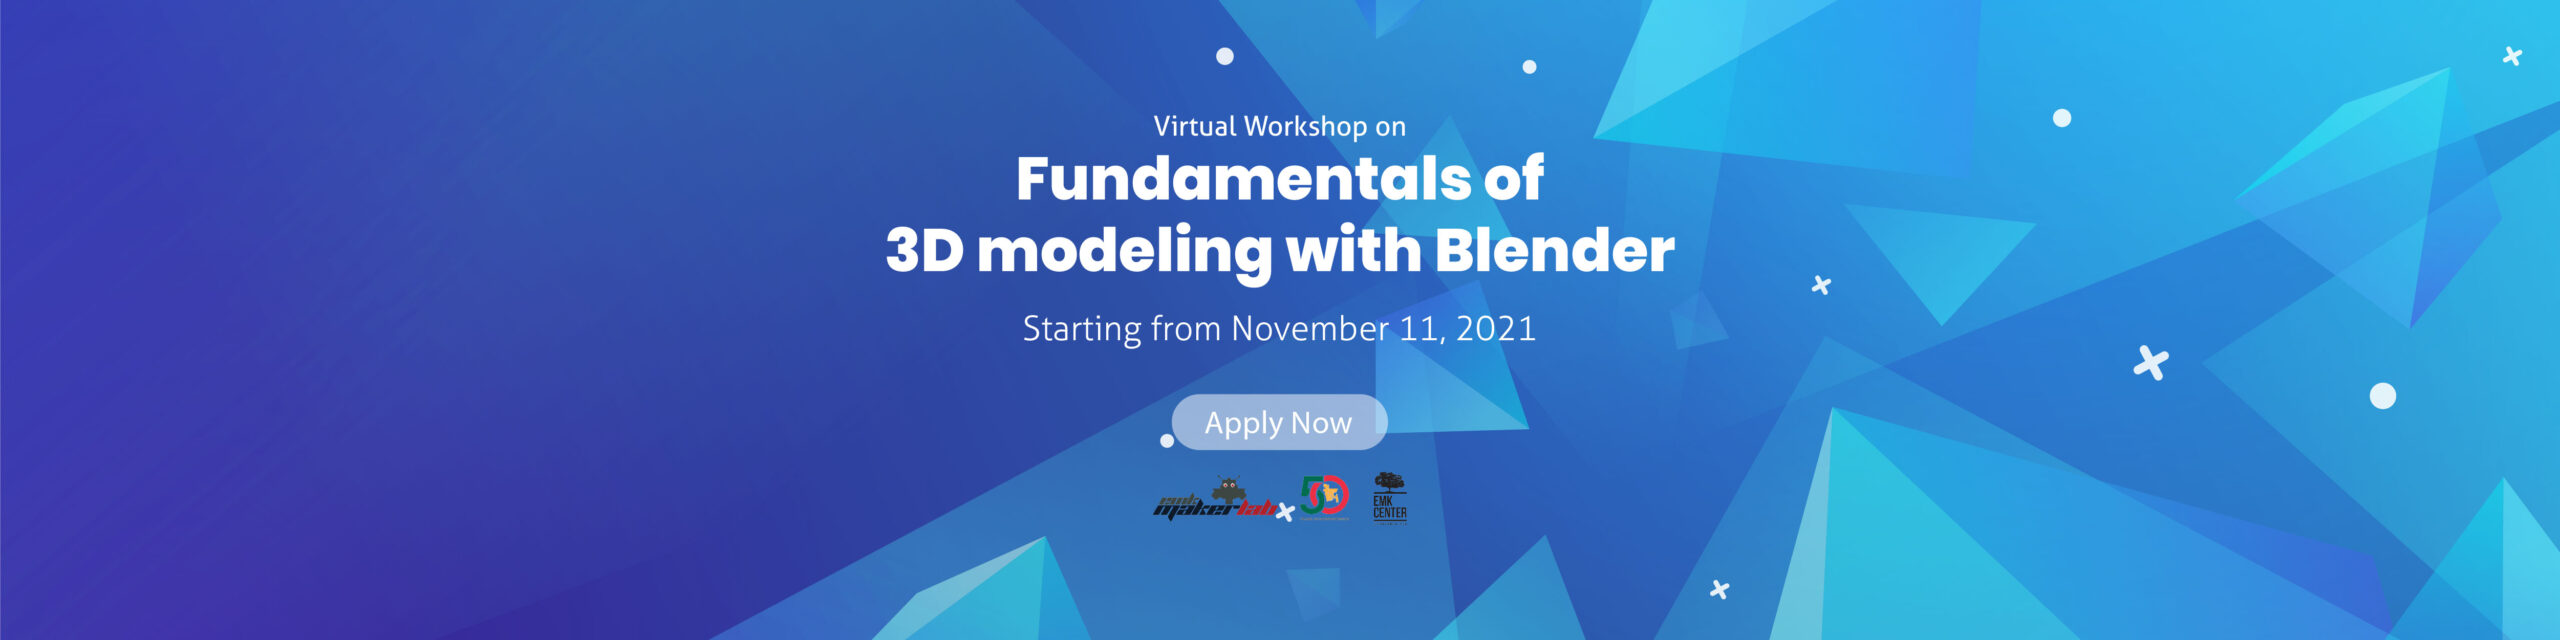 Fundamentals of 3D Modeling with Blender